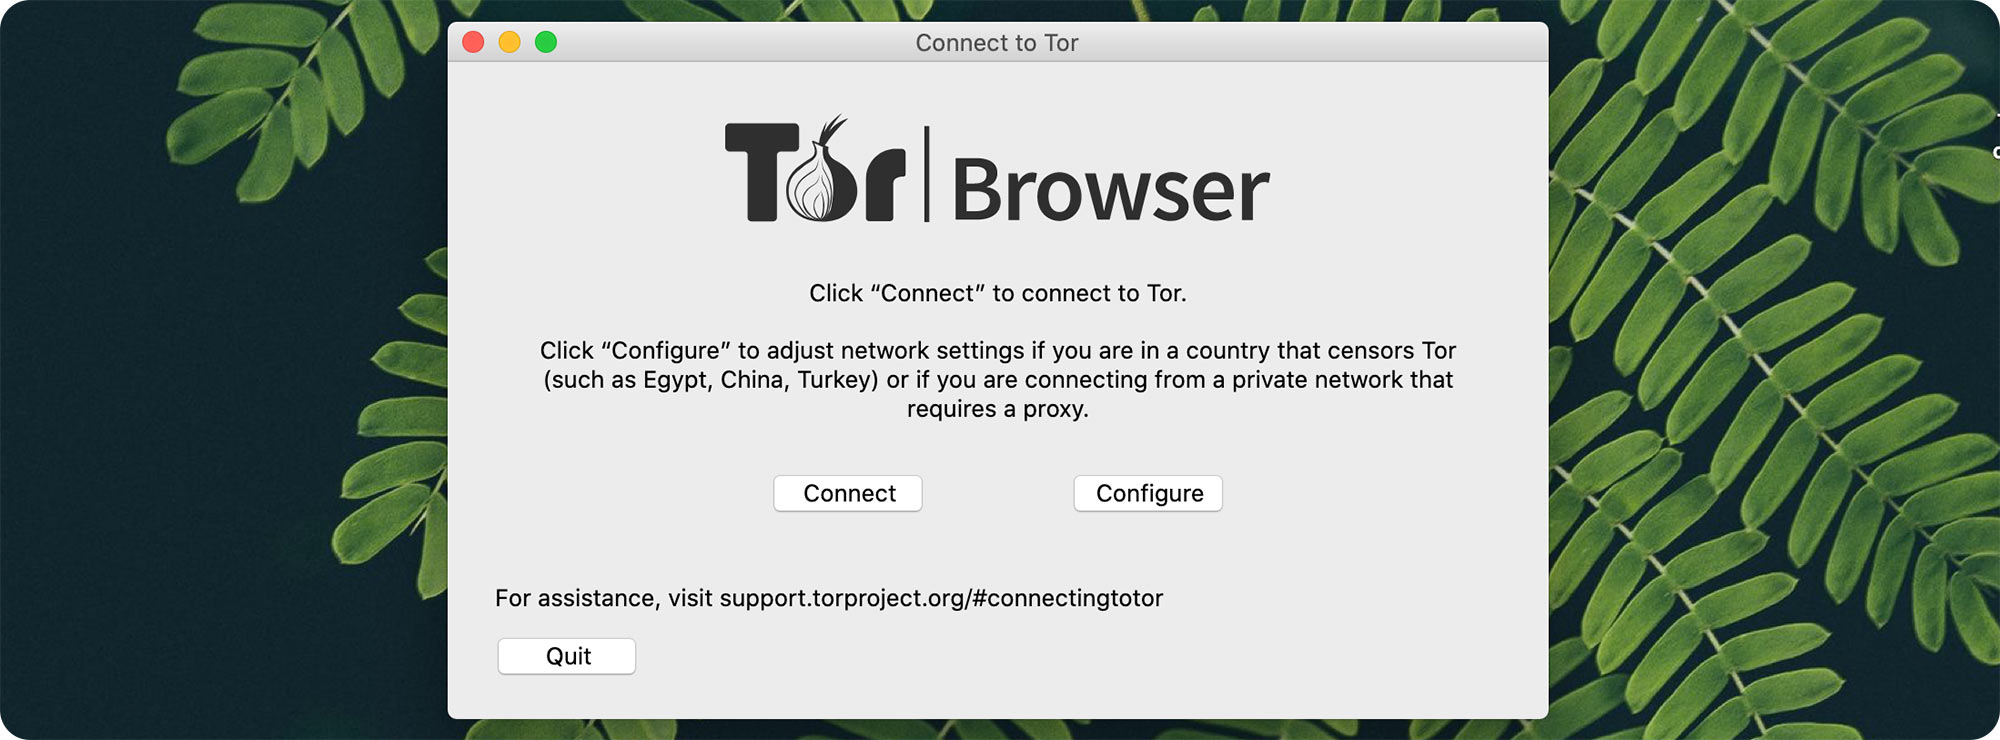 Tor browser imac hudra конопля избавление